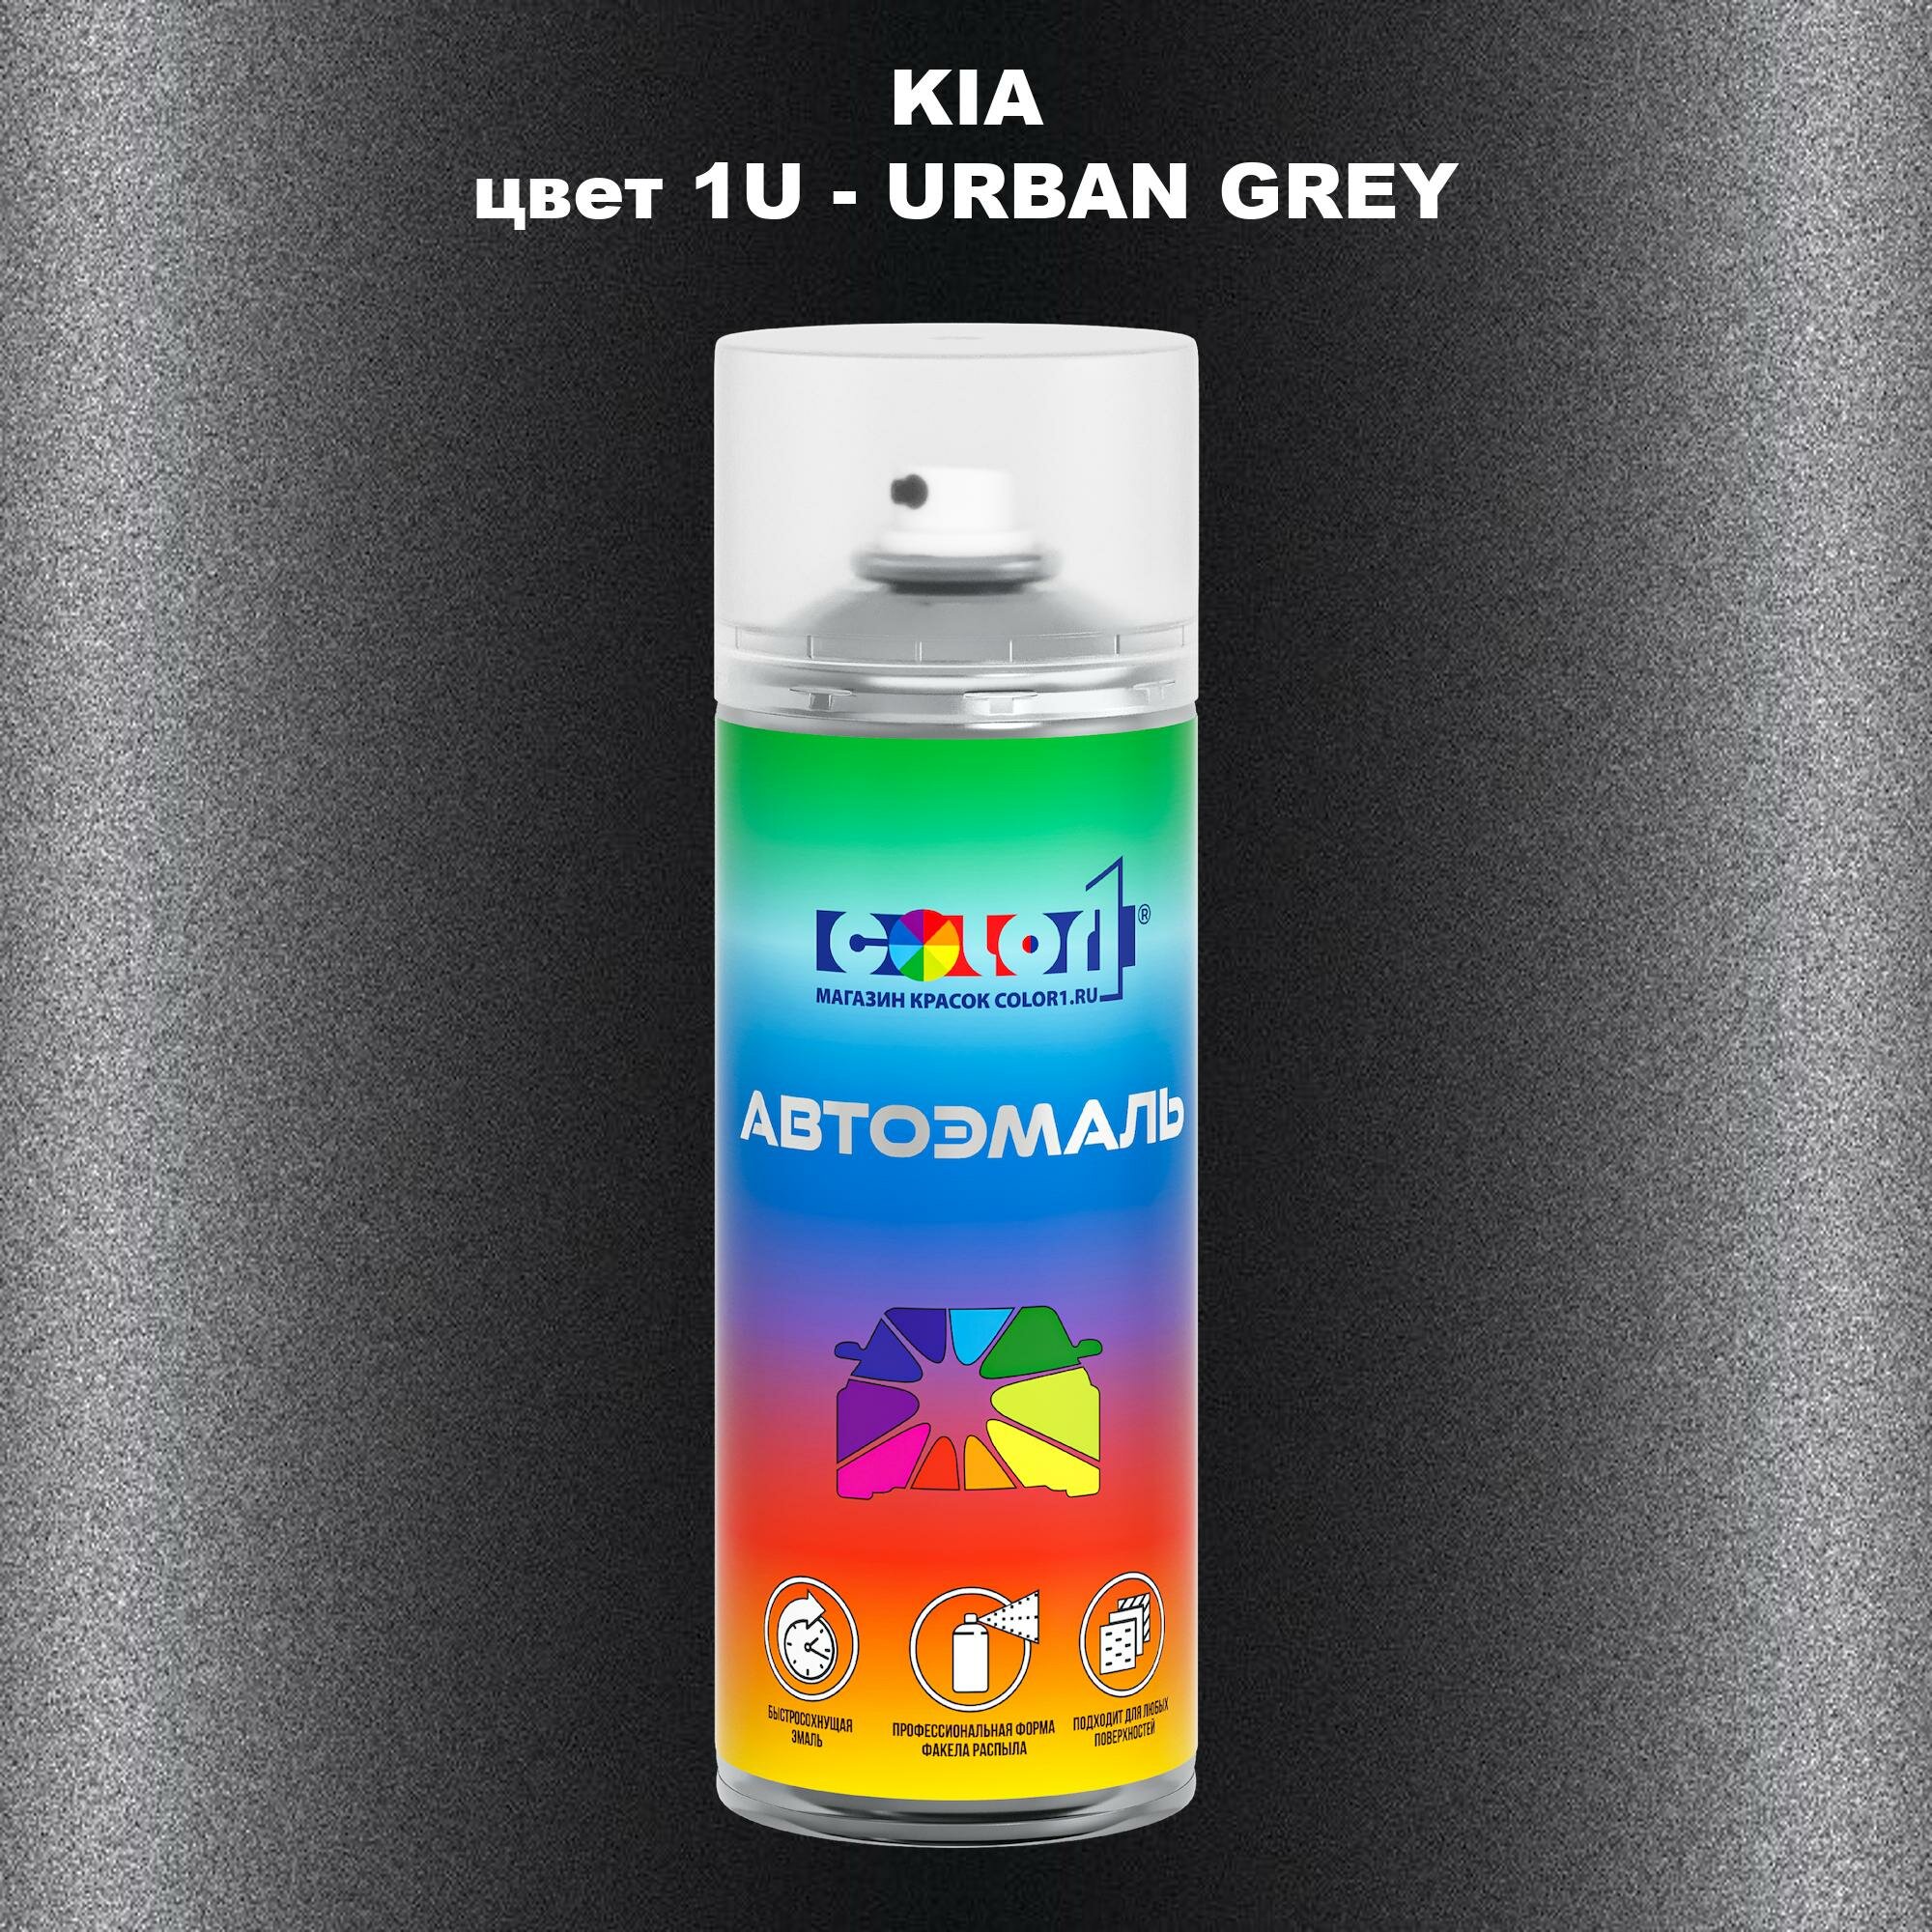 Аэрозольная краска COLOR1 для KIA, цвет 1U - URBAN GREY